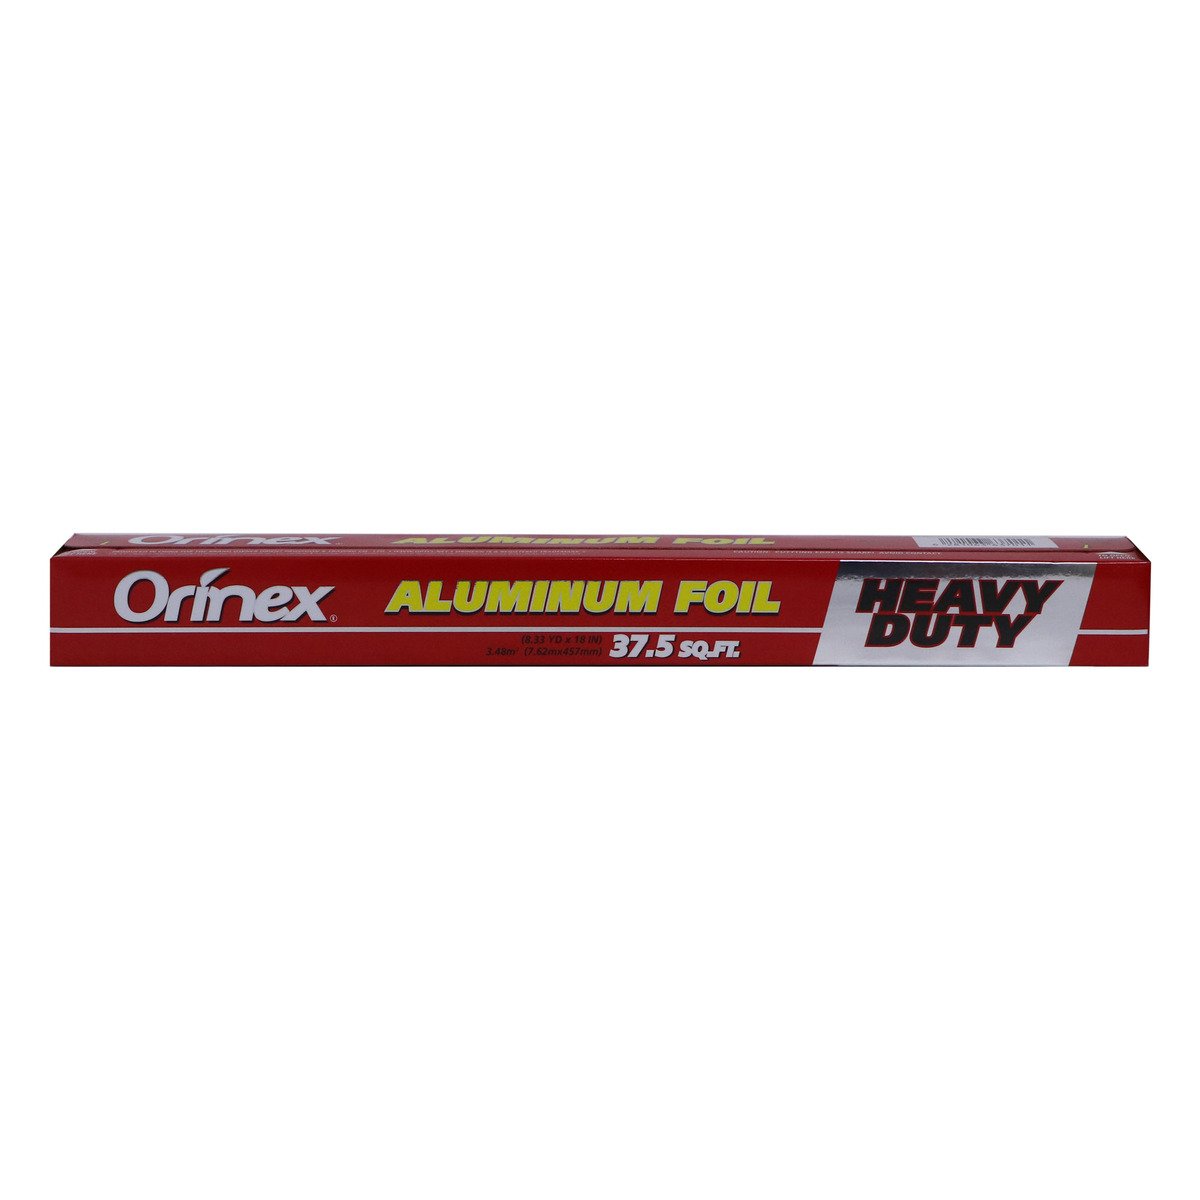 Orinex Heavy Duty Aluminum Foil 37.5sq.ft Size 7.62m x 457mm 1pc